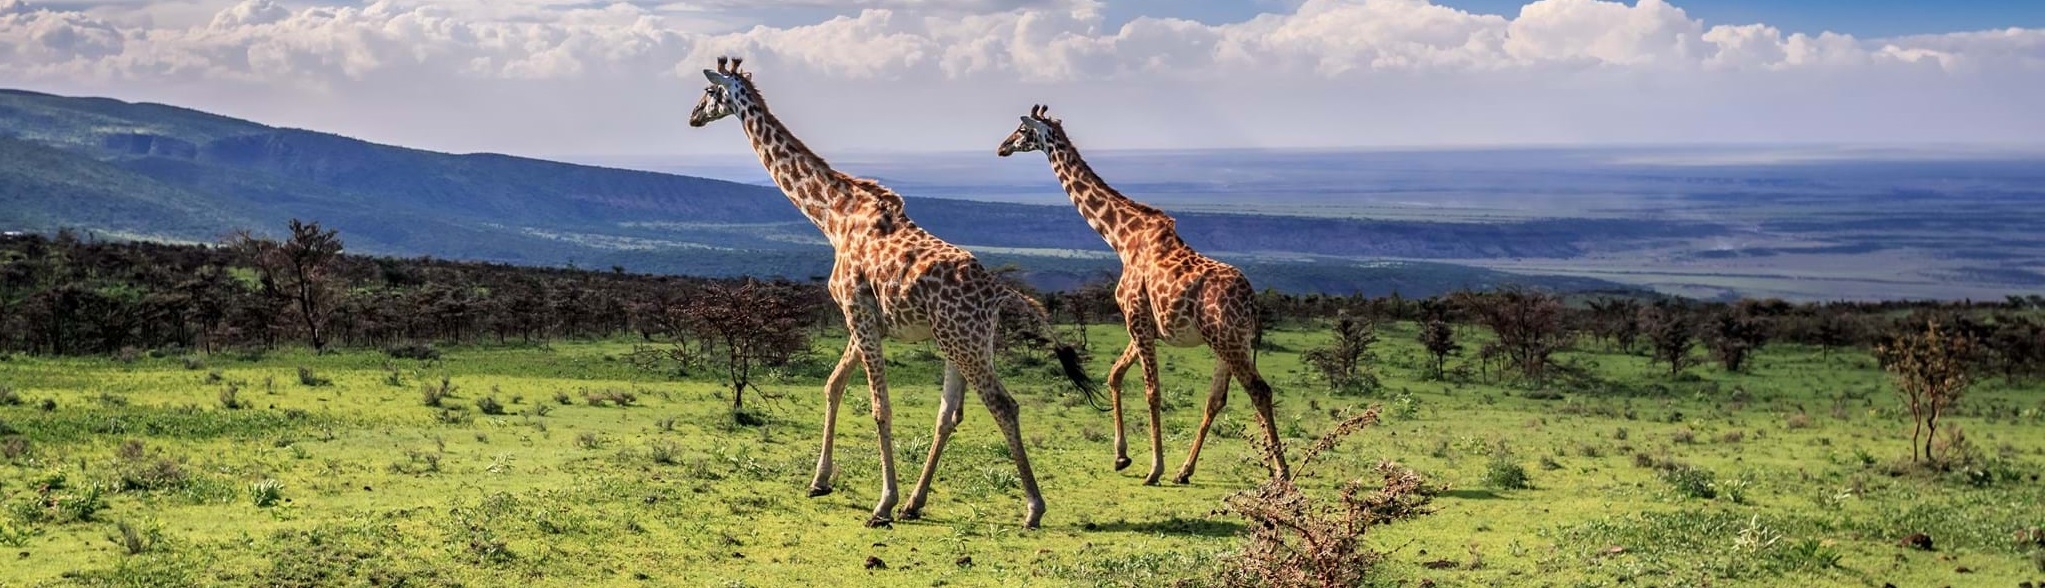 Katavi National Park | Yellow Giraffe Safaris